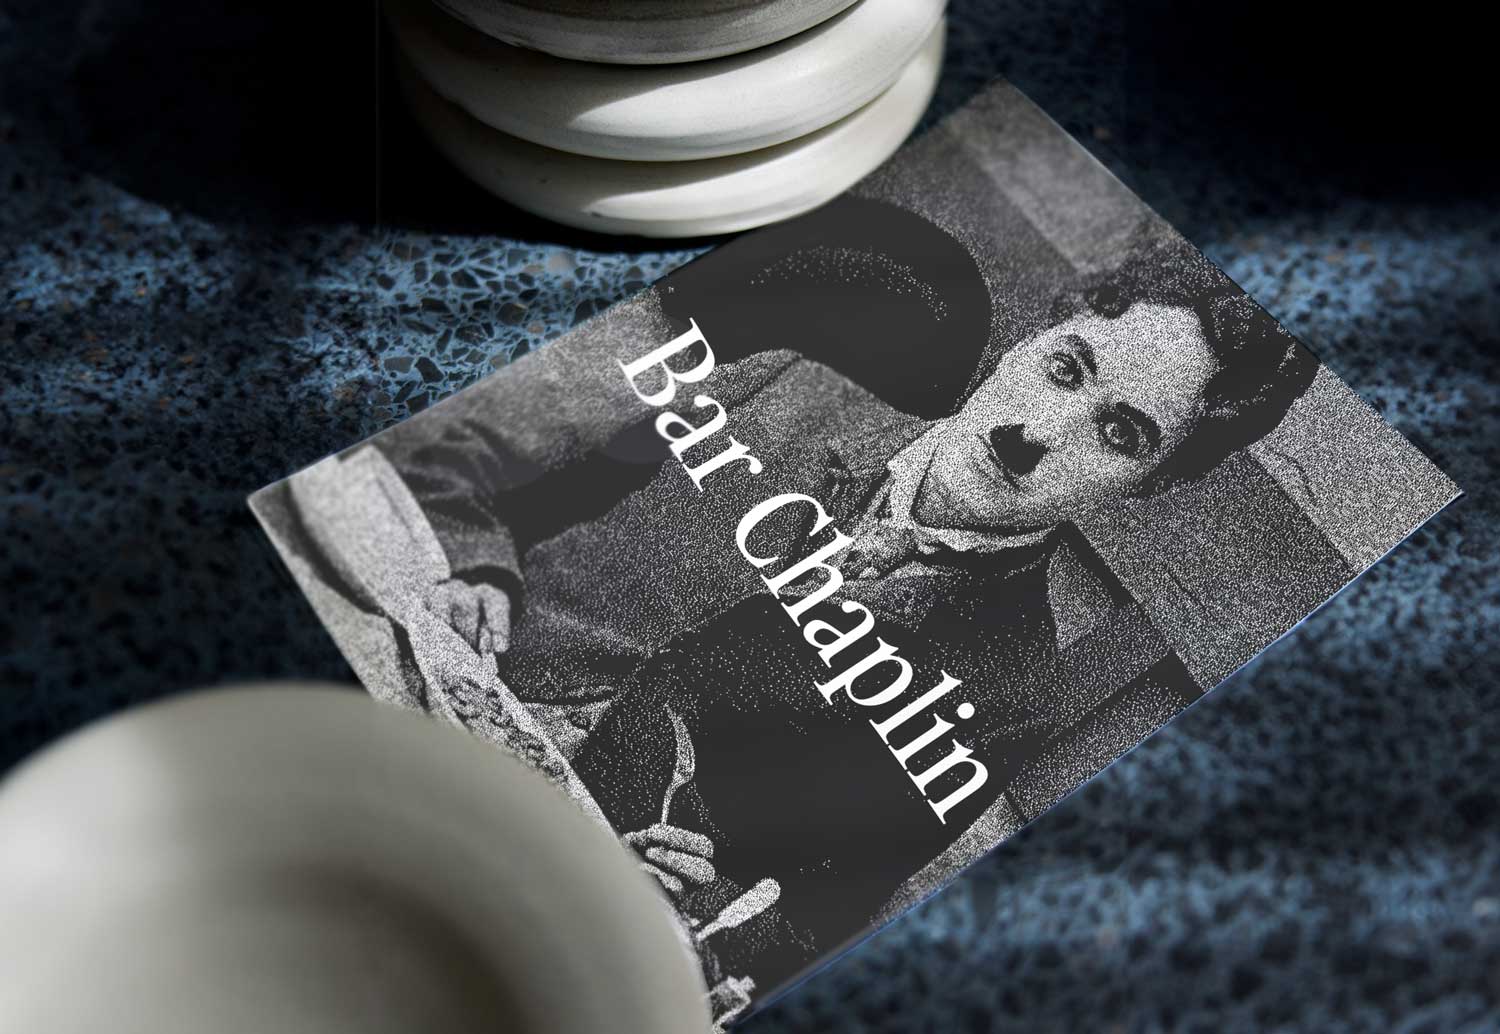 Image from Bar Chaplin